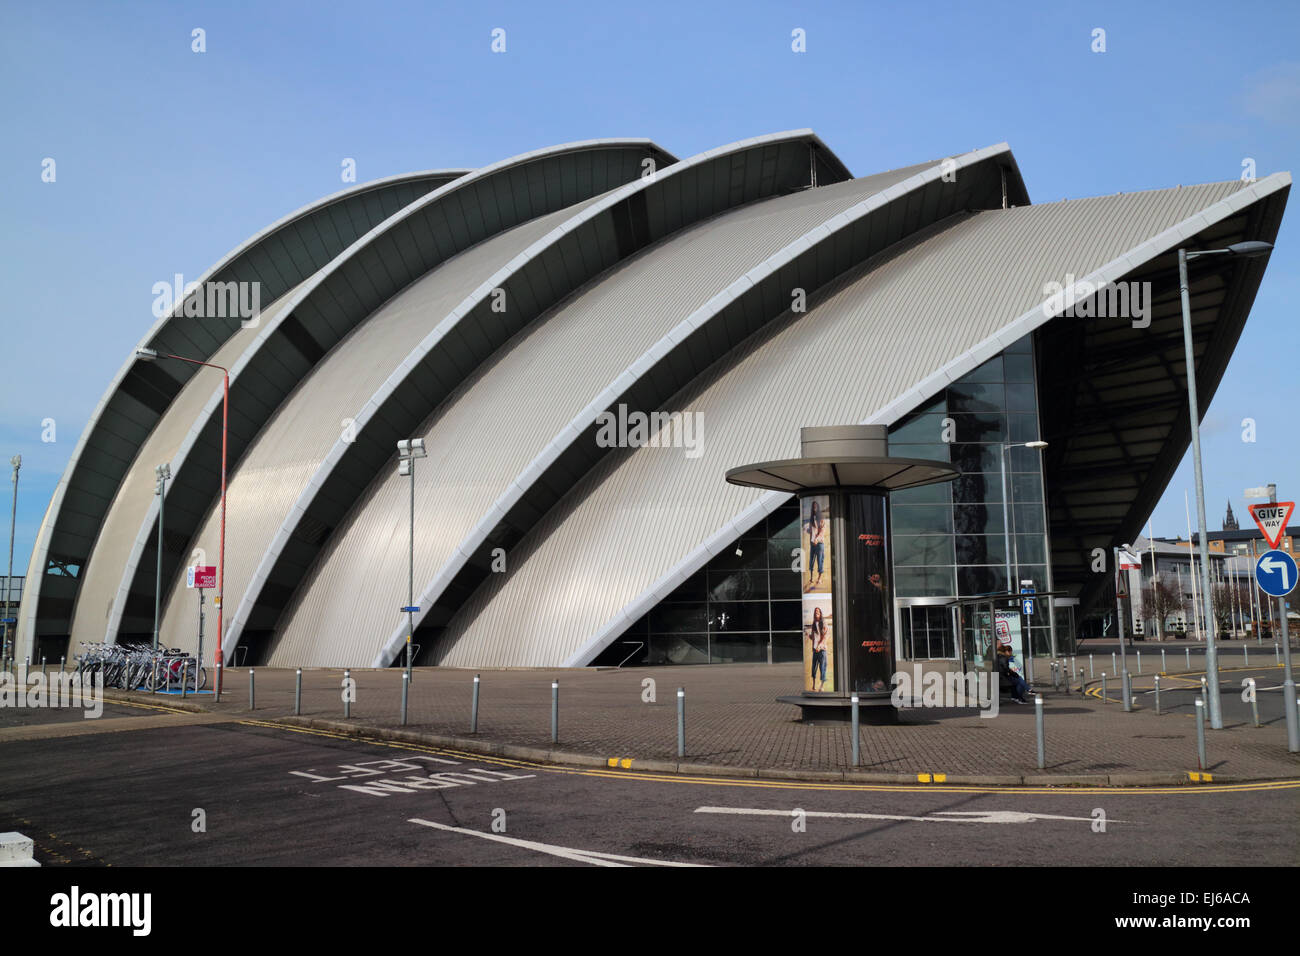 Clyde auditorium en el SECC (Scottish Exhibition and Conference Centre Glasgow Scotland Reino Unido Foto de stock